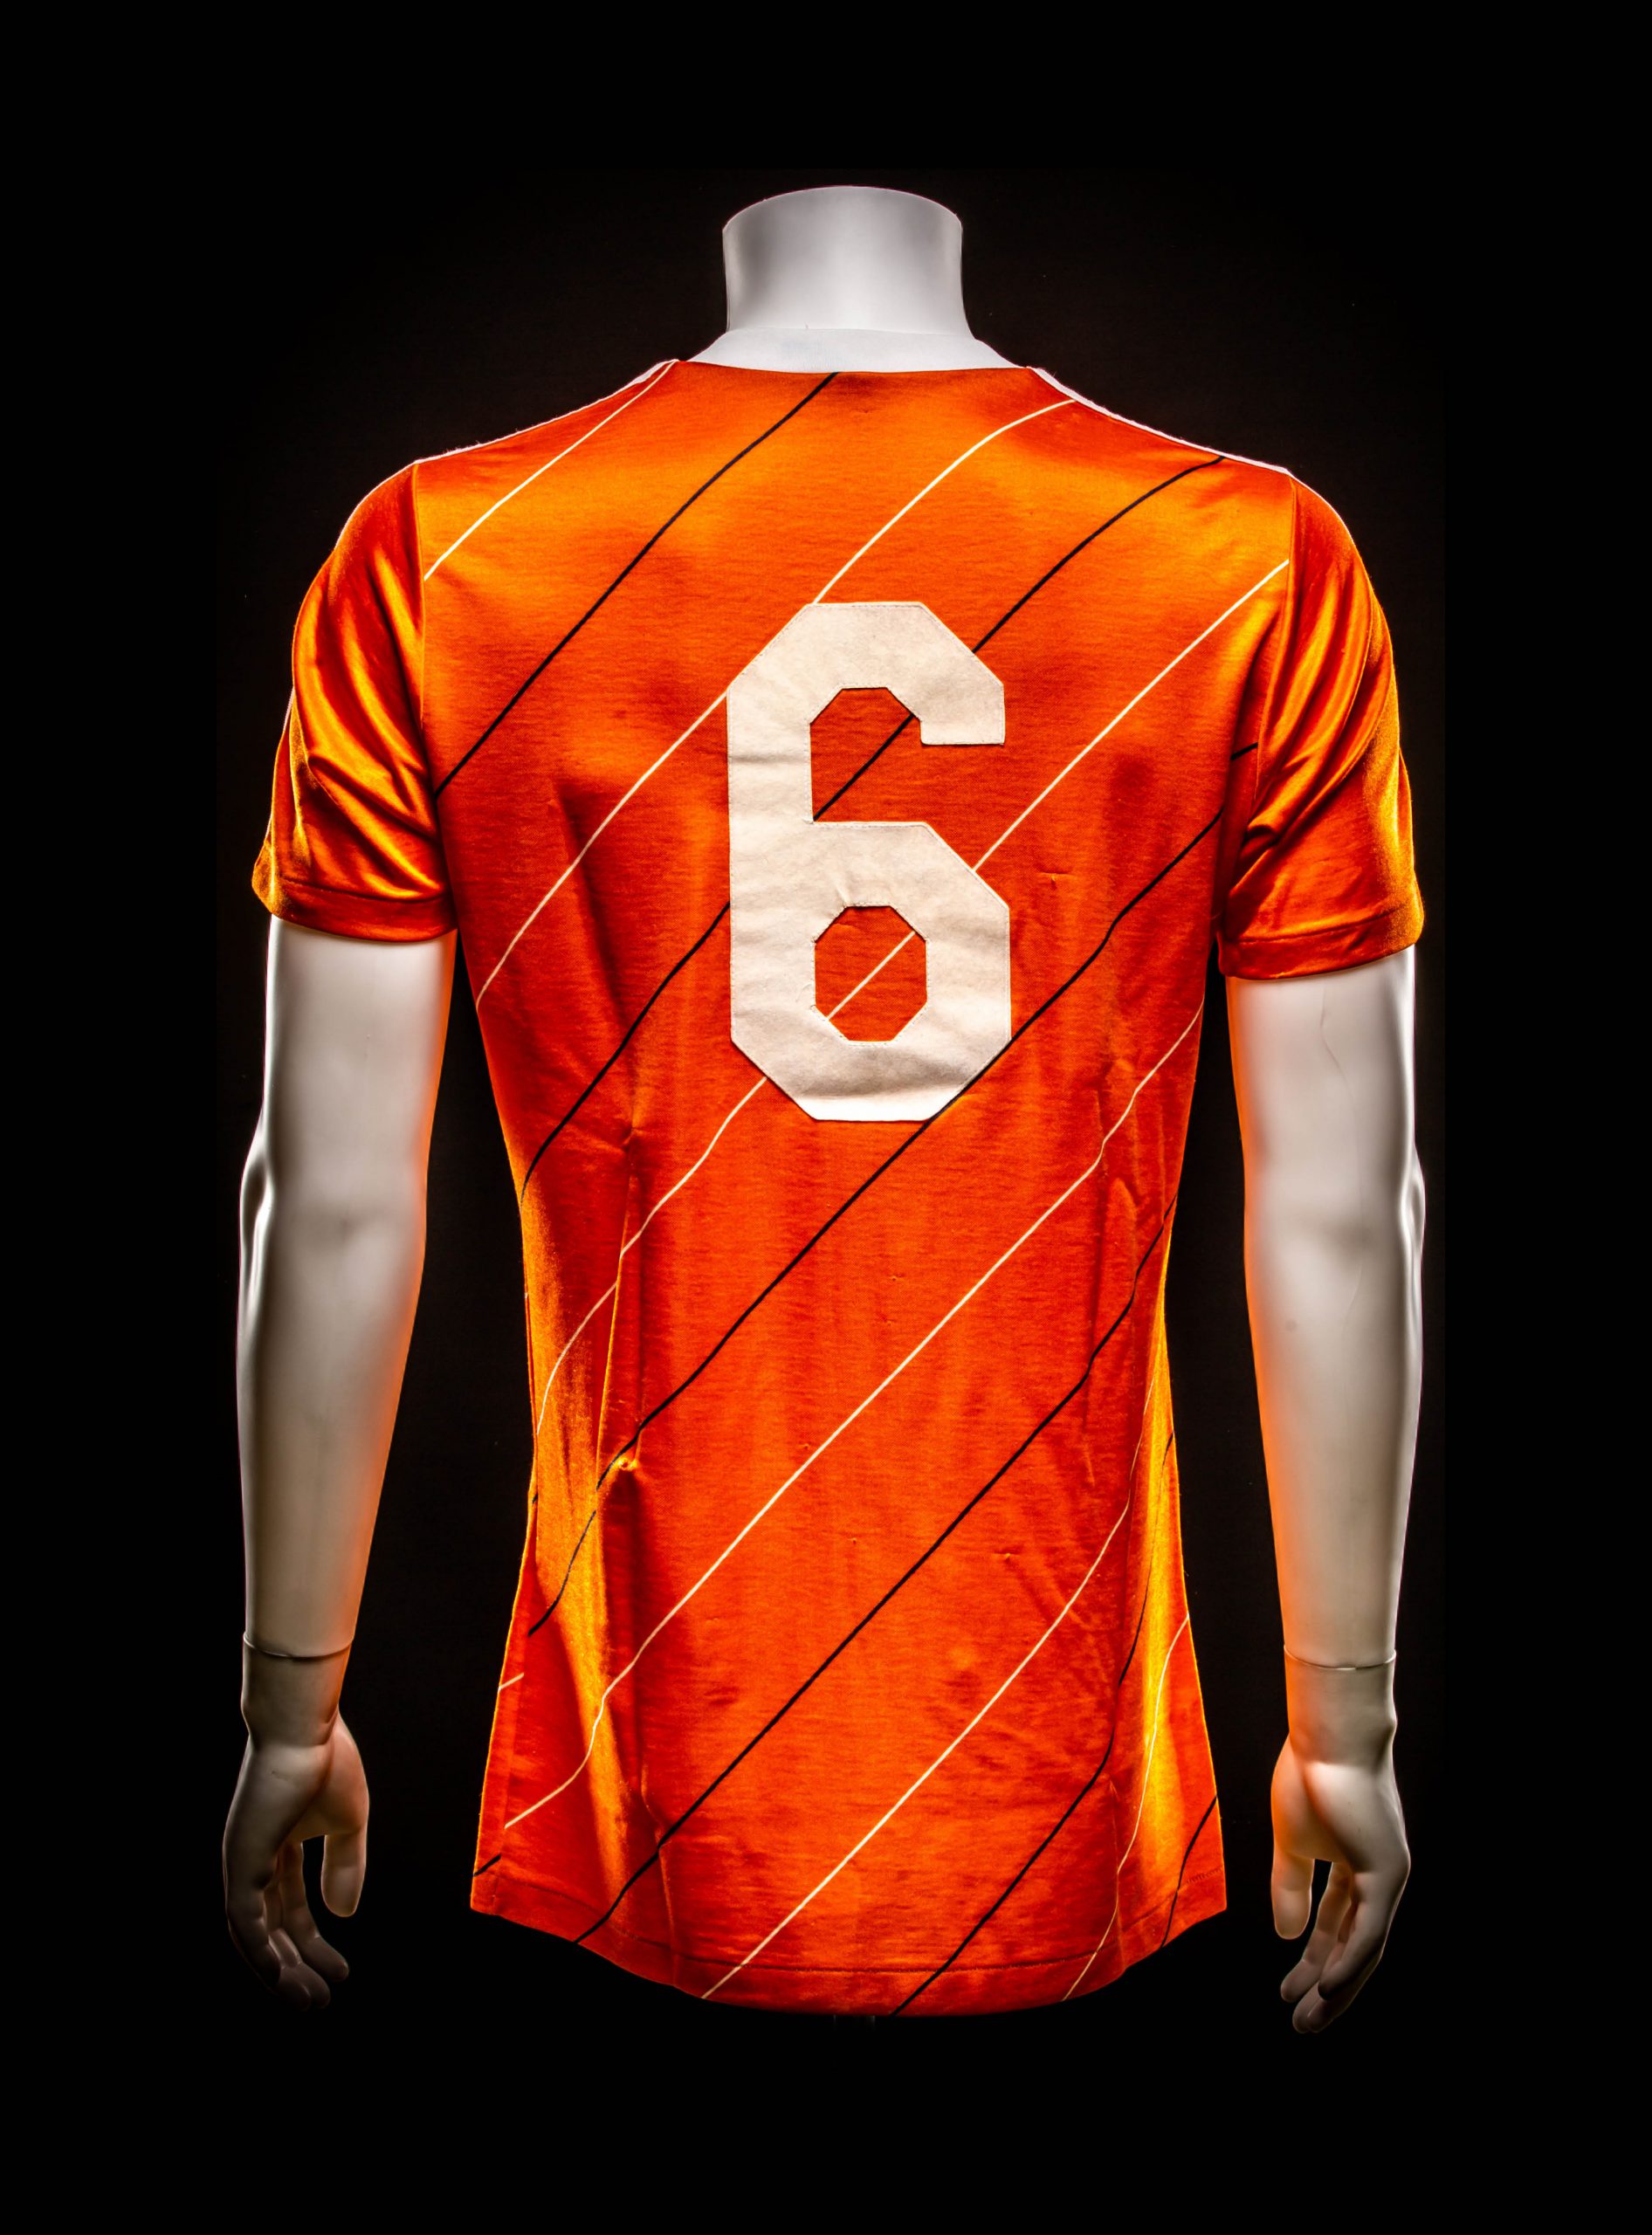 #6 Jong Oranje Martin Laamers